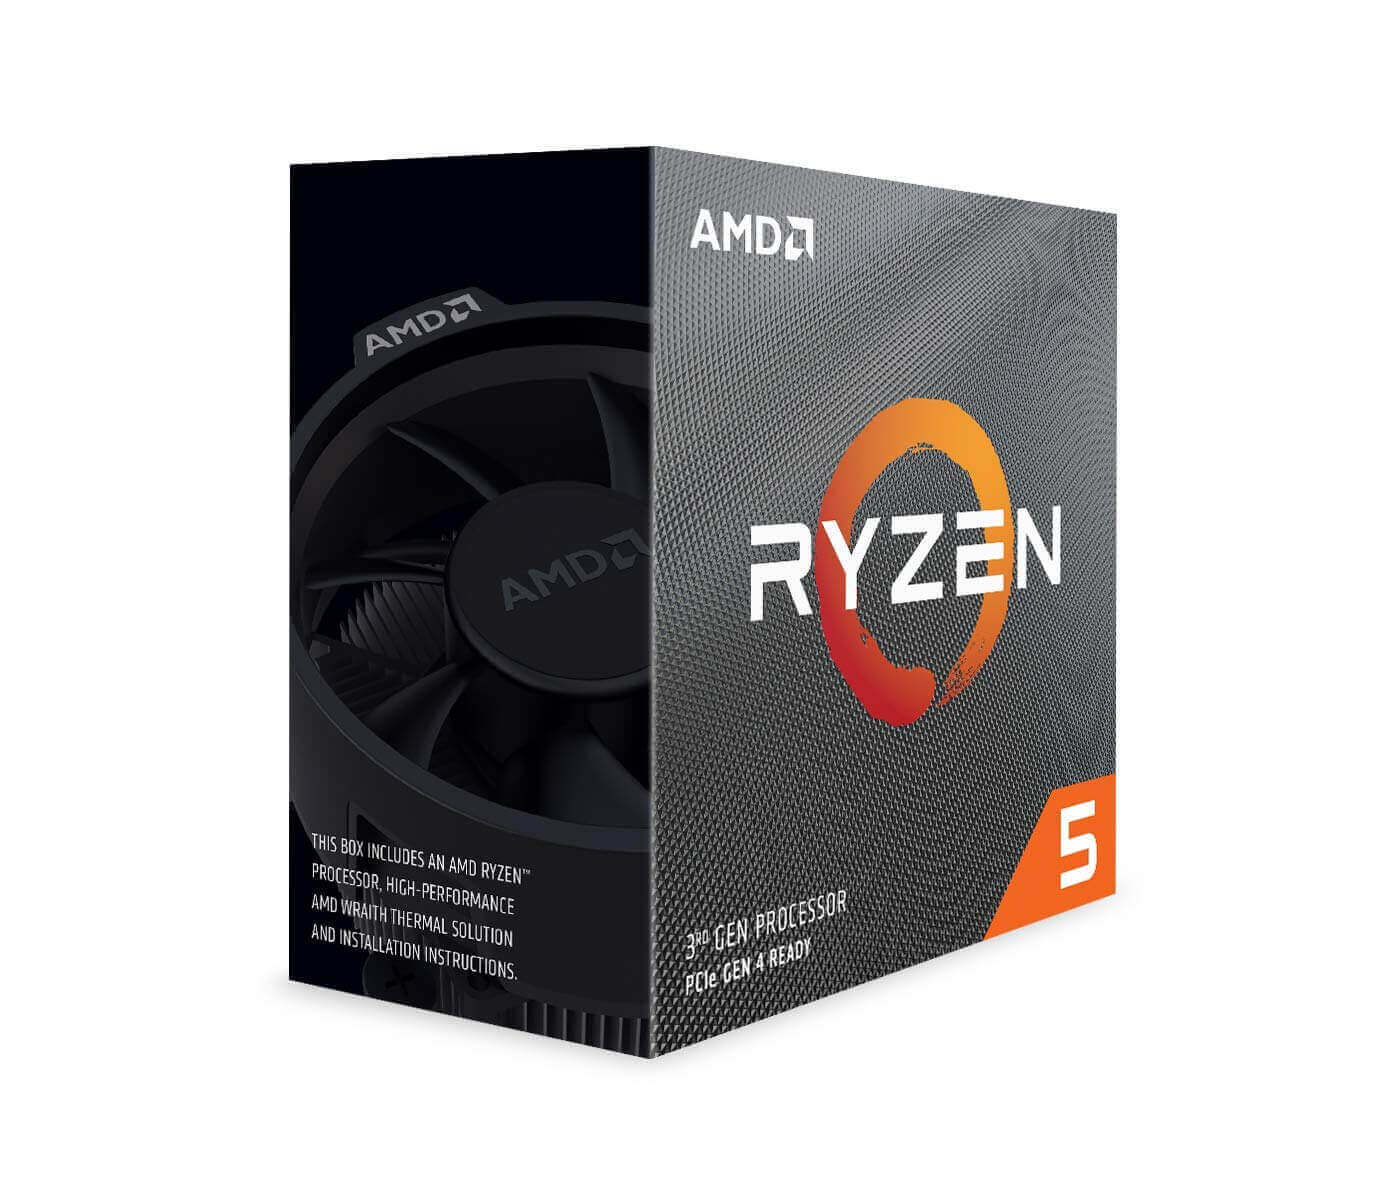 AMD Ryzen 5 3600 Desktop Processor 6 Cores up to 4.2 GHz 35MB Cache AM4 Socket (100-000000031)